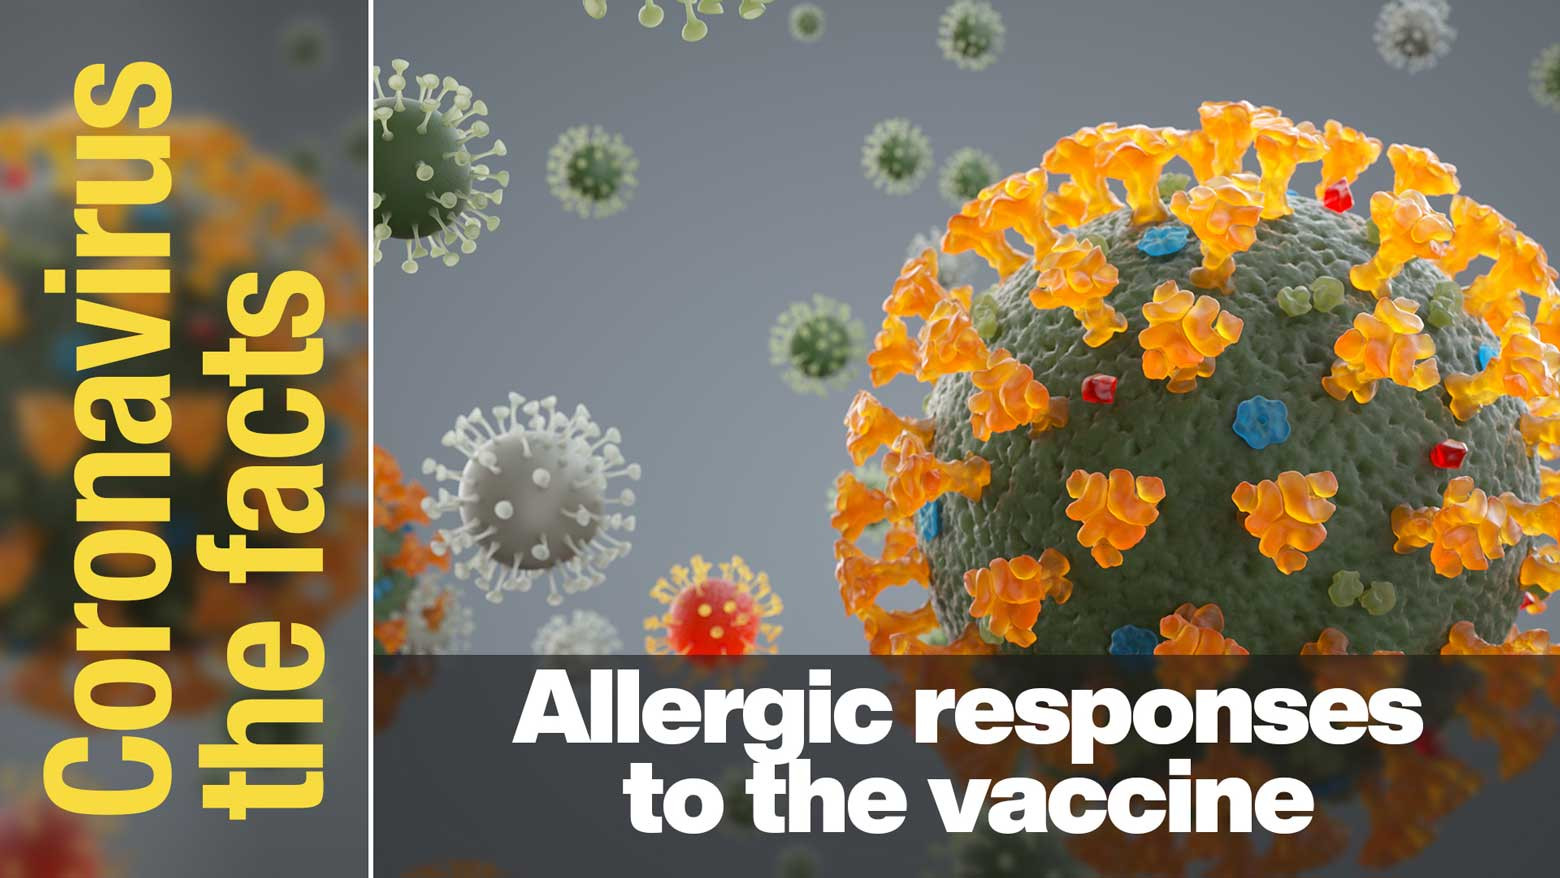 Is the coronavirus vaccine safe?